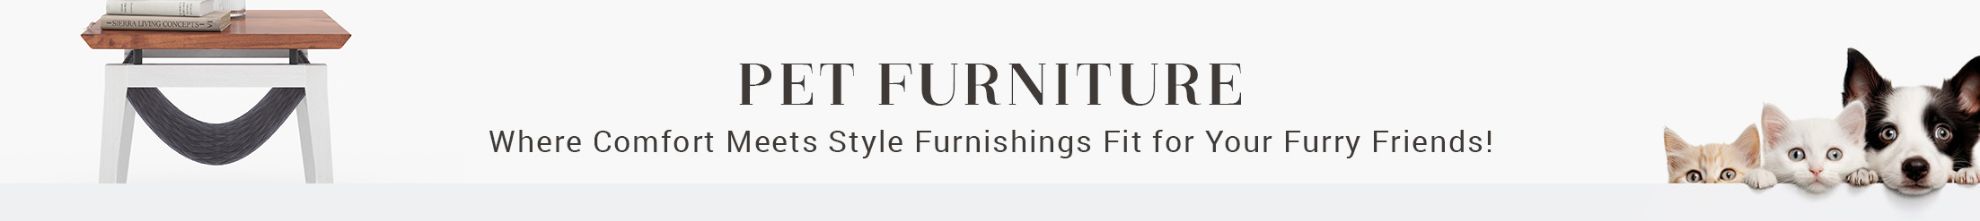 Pet Furniture